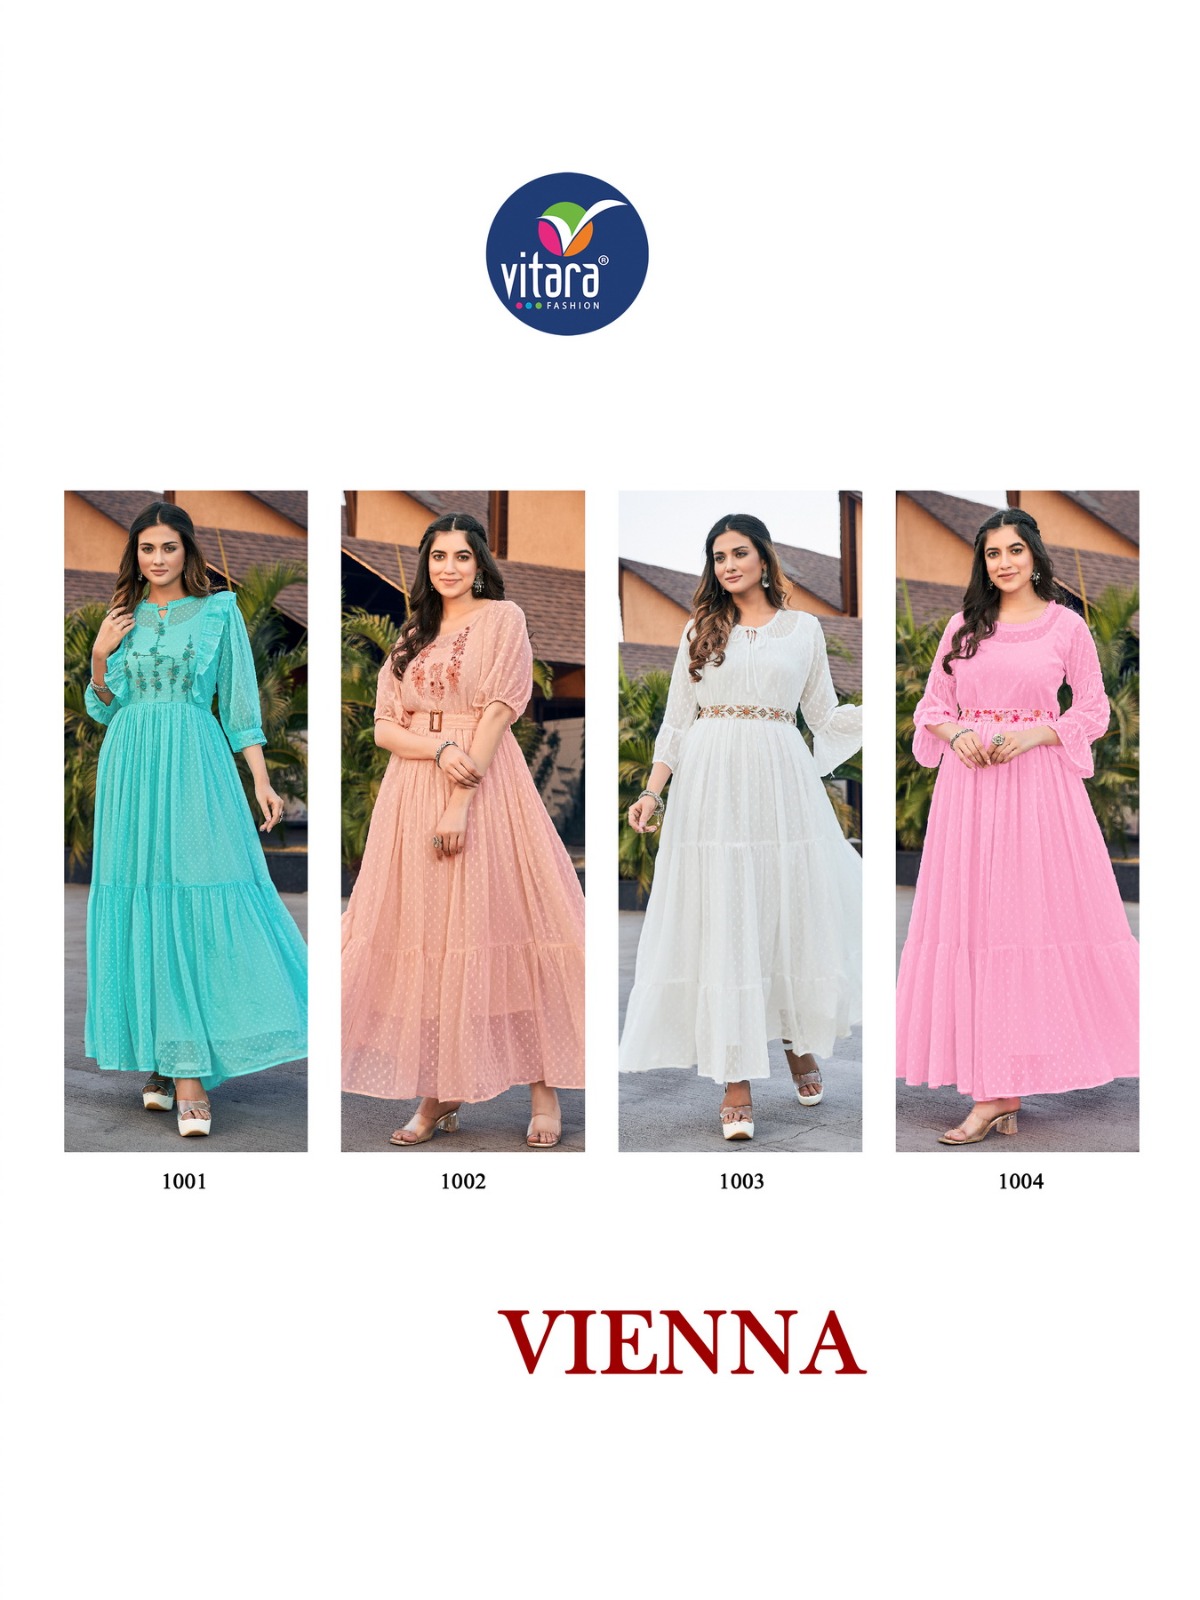 Vitara Vienna collection 3